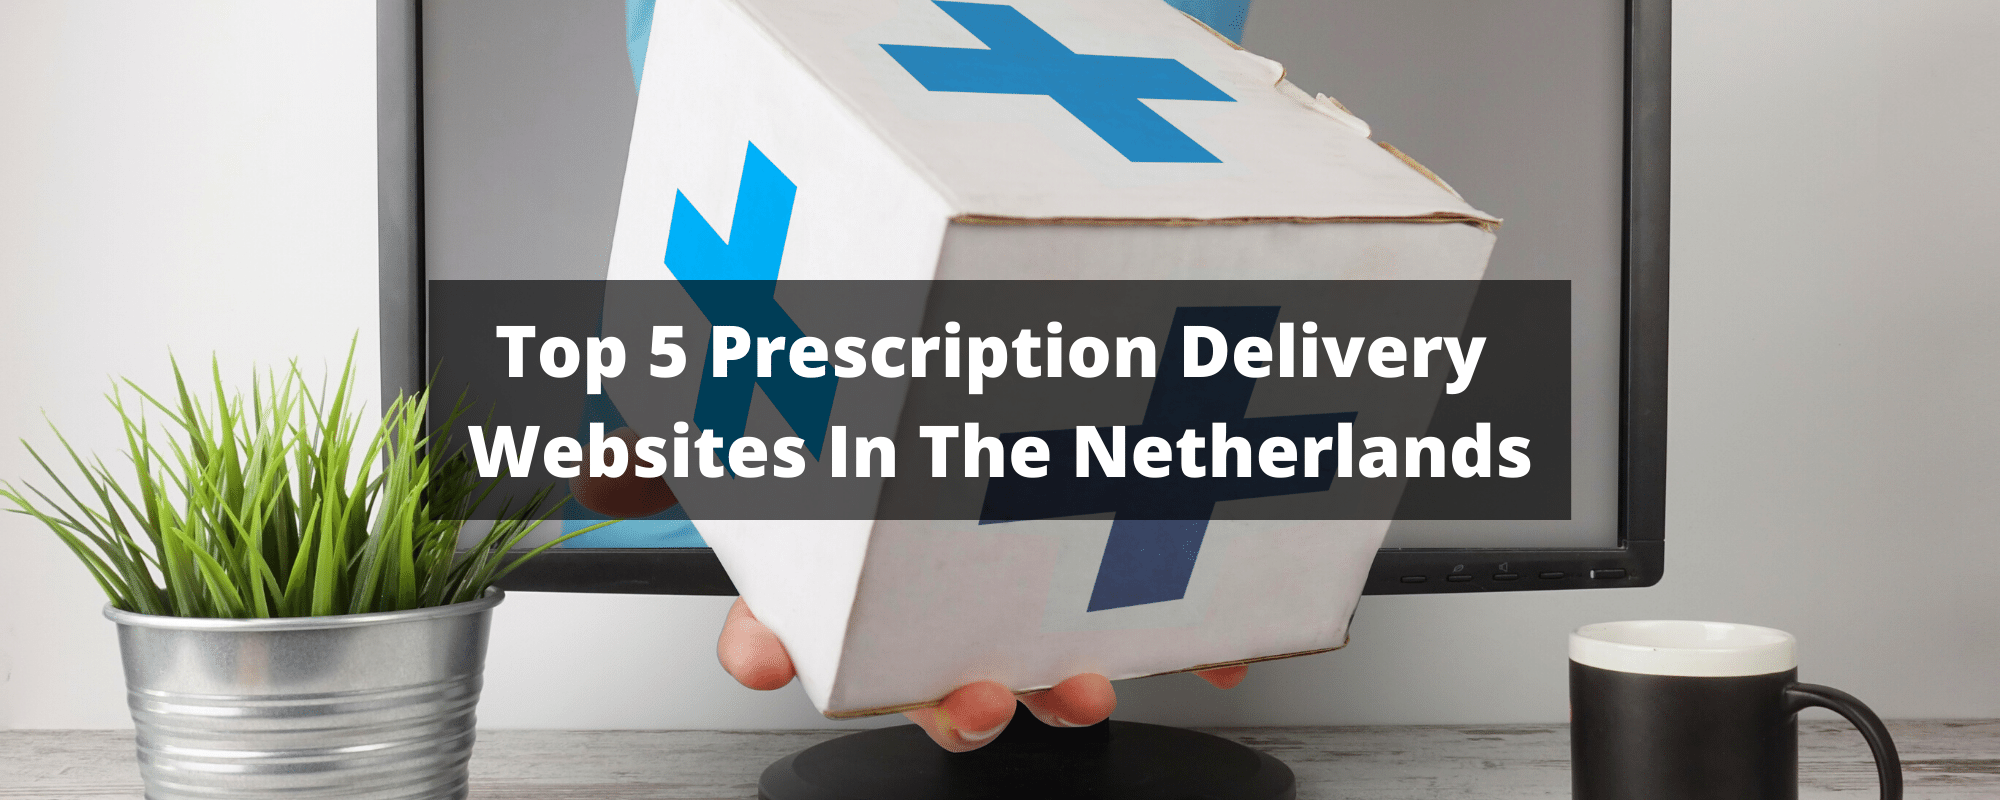 prescription delivery websites in the netherlands